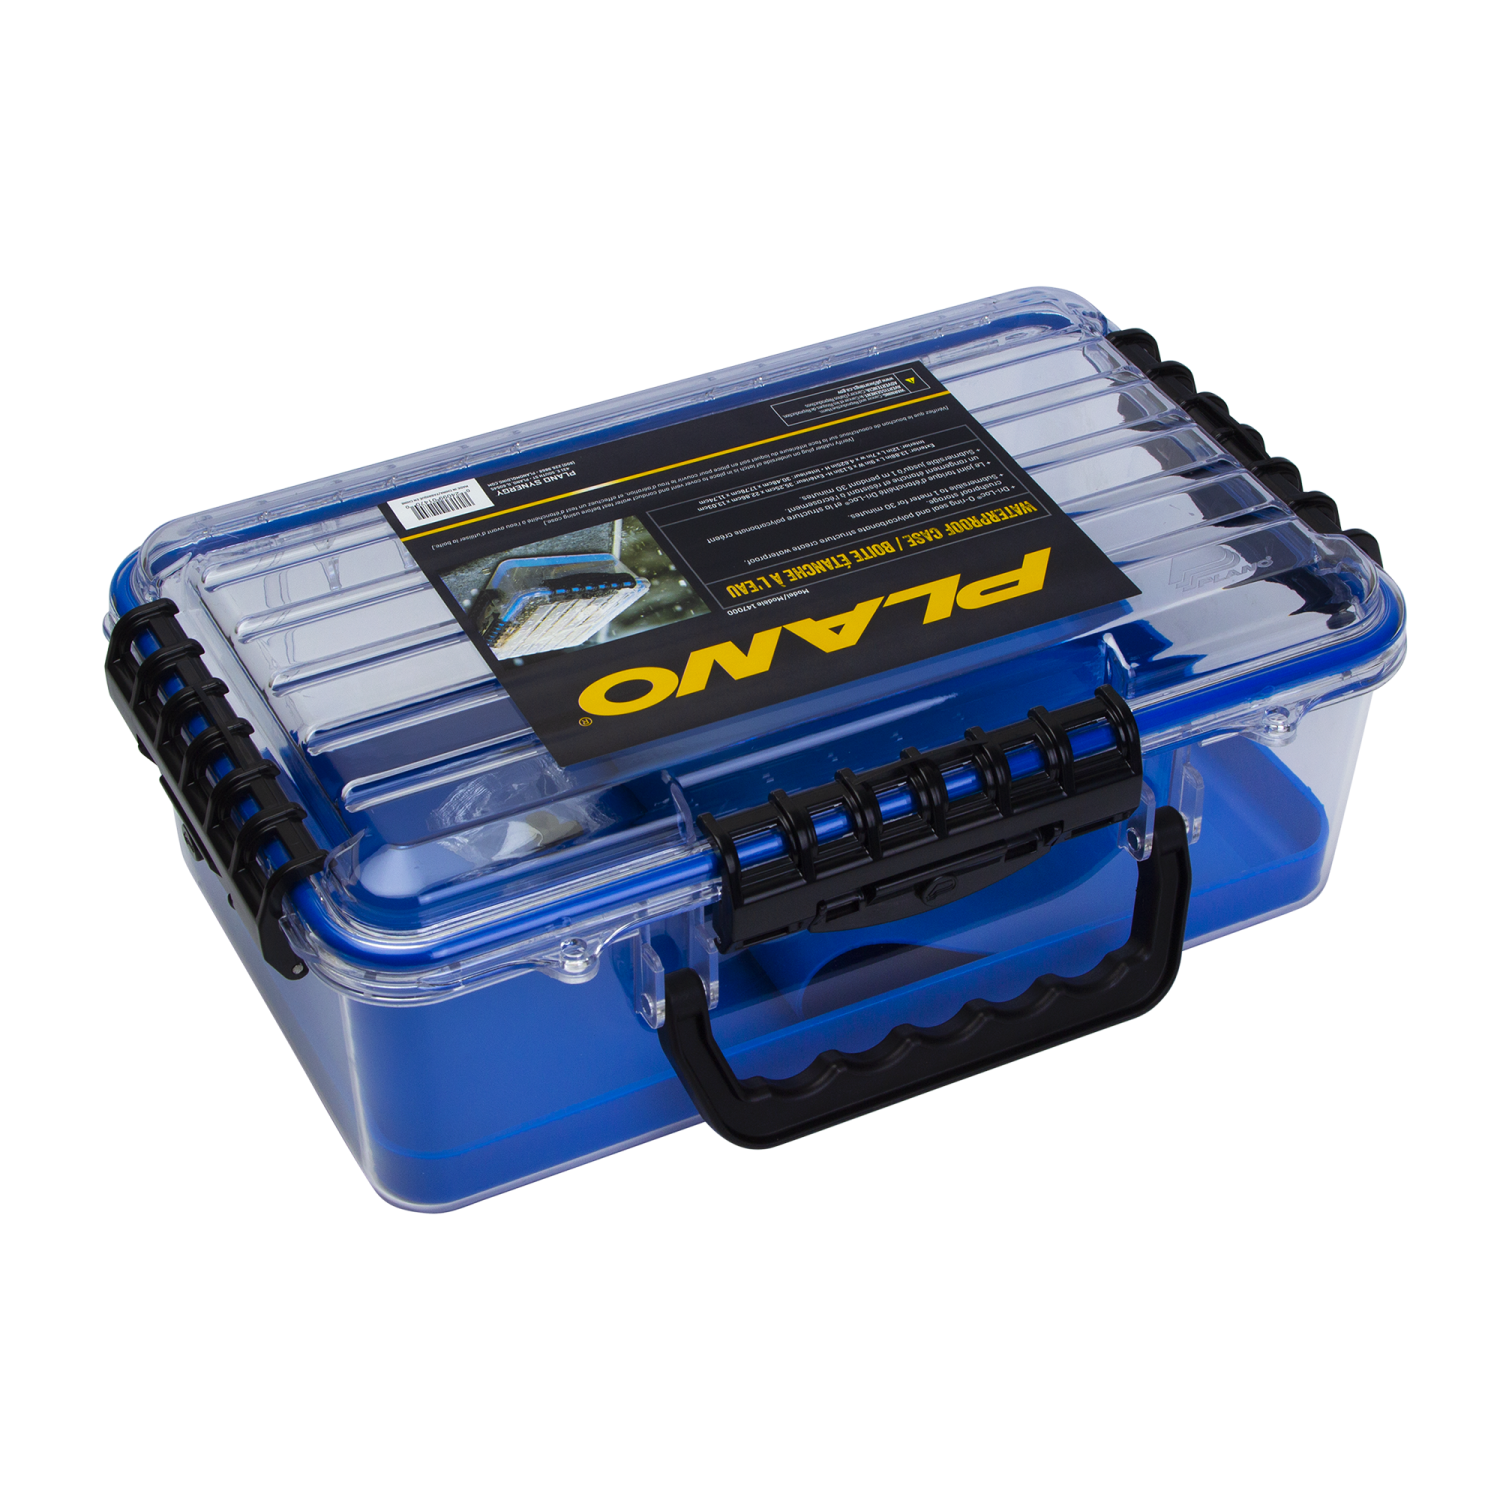 Коробка водонепроницаемая Plano Guide Series Waterproof Case 3700